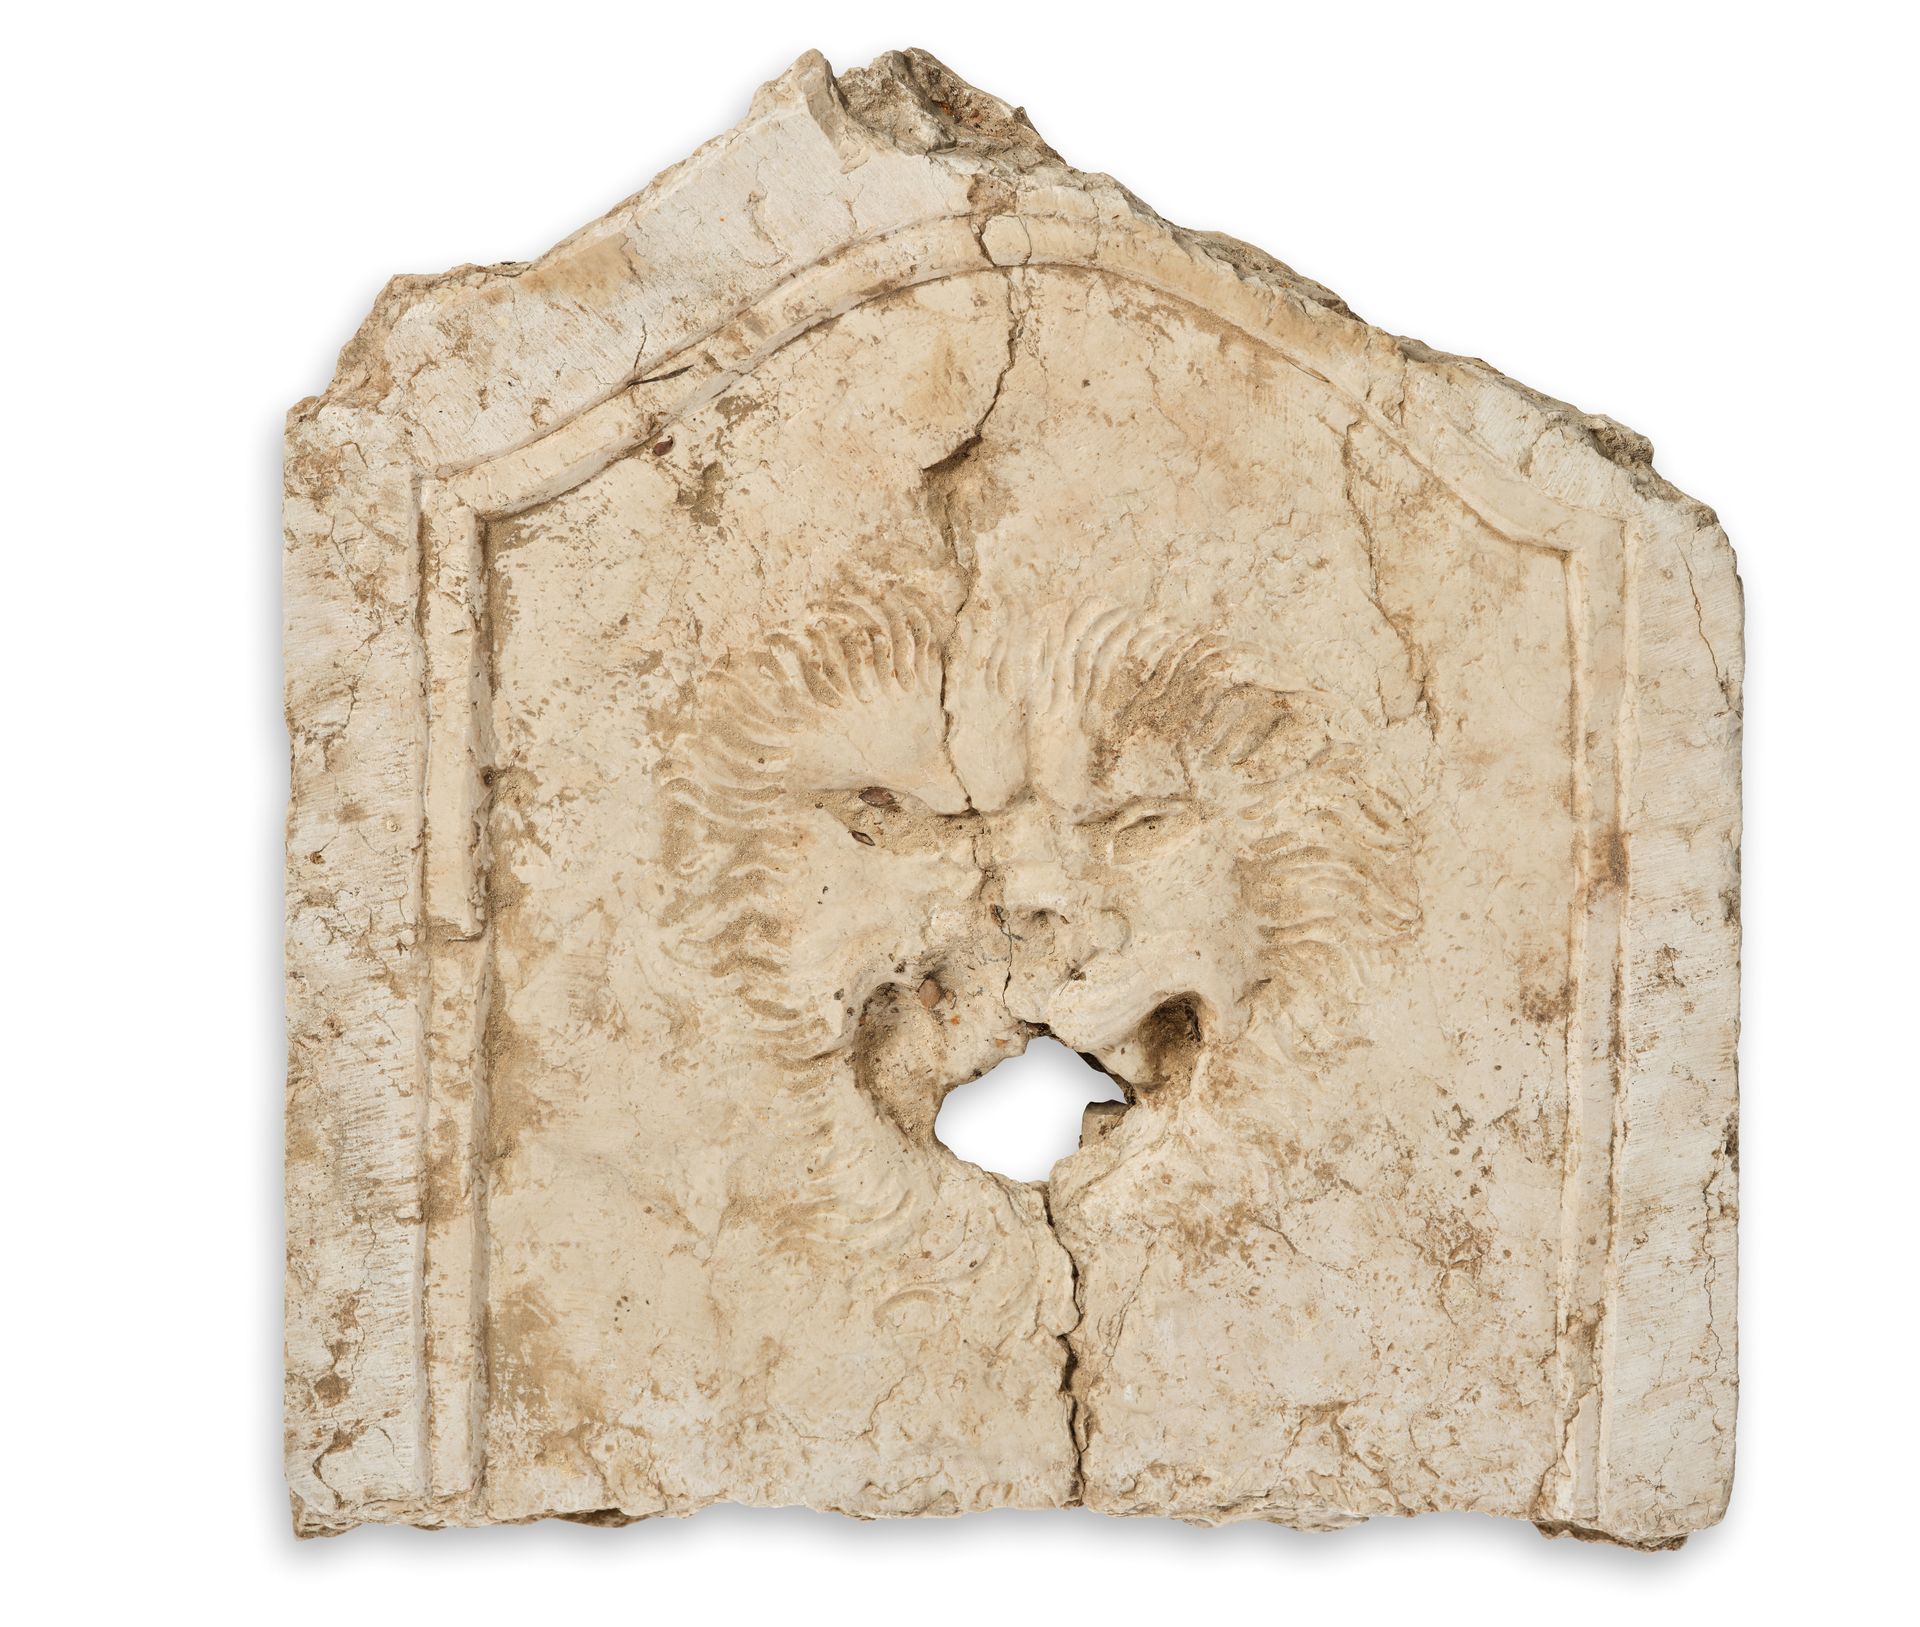 Null 大理石石雕喷泉面具，低浮雕有一个猫脸。意大利北部，17世纪。
高：41厘米 - 宽：40厘米
深度：4.5厘米（损坏）。